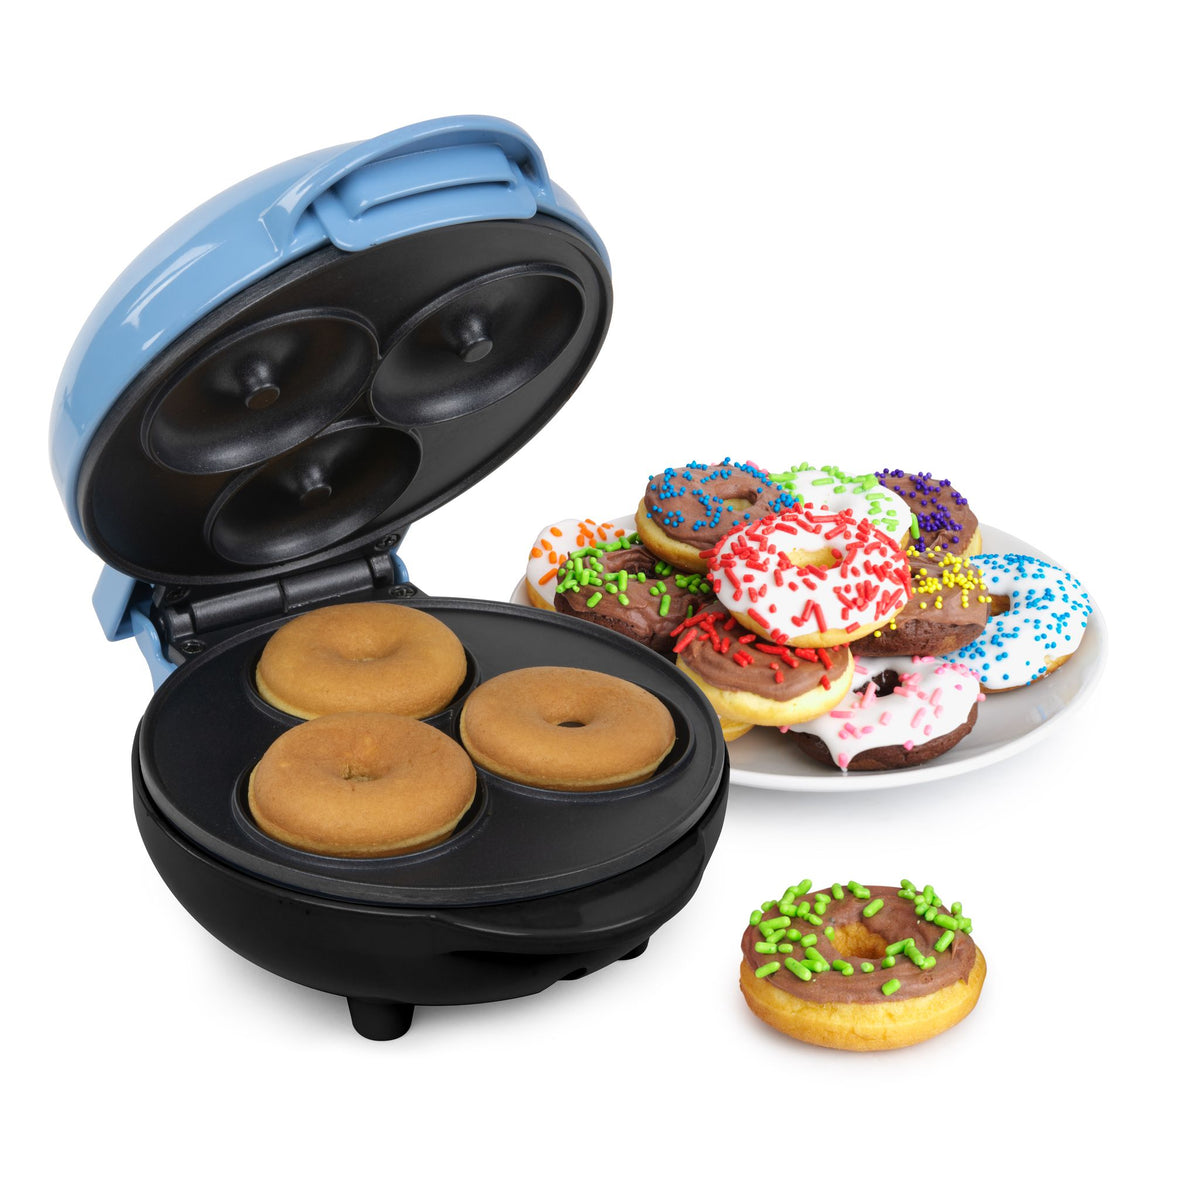 wasserette Toepassen Meting MyMini Orbital Donut Maker, Blue — Nostalgia Products